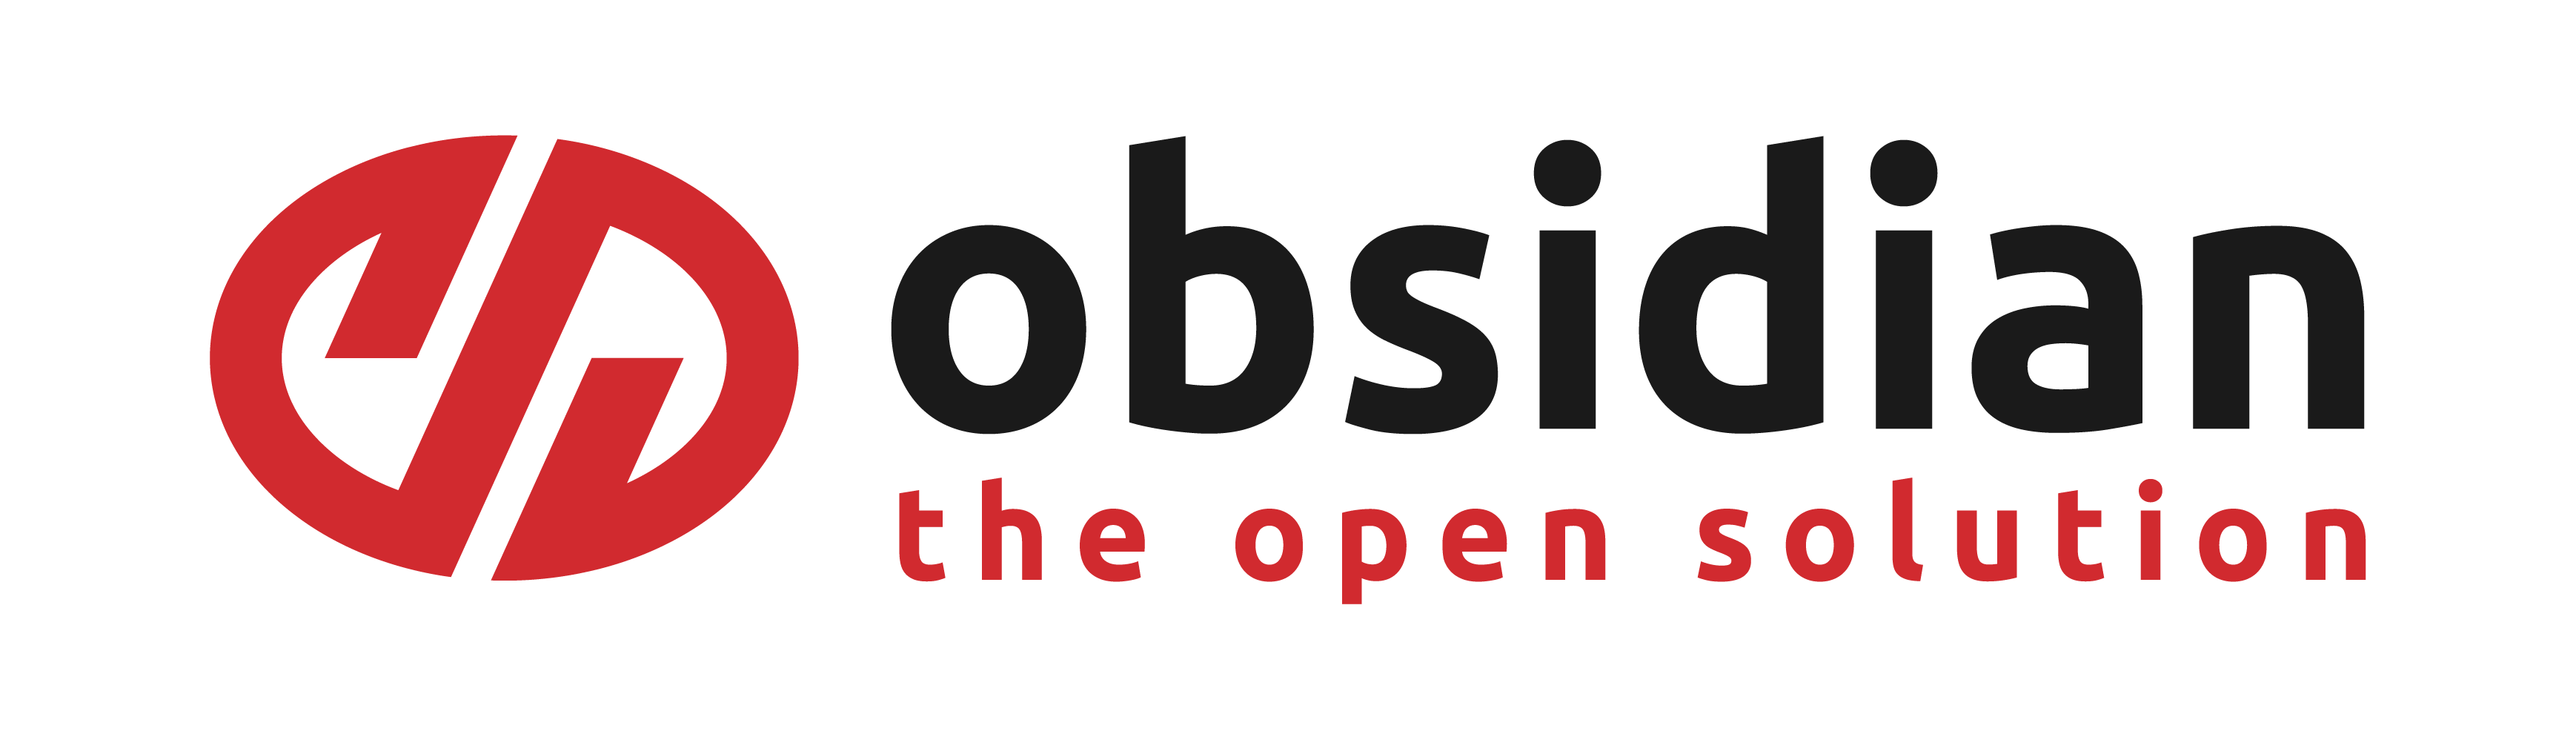 Obsidian Systems logo